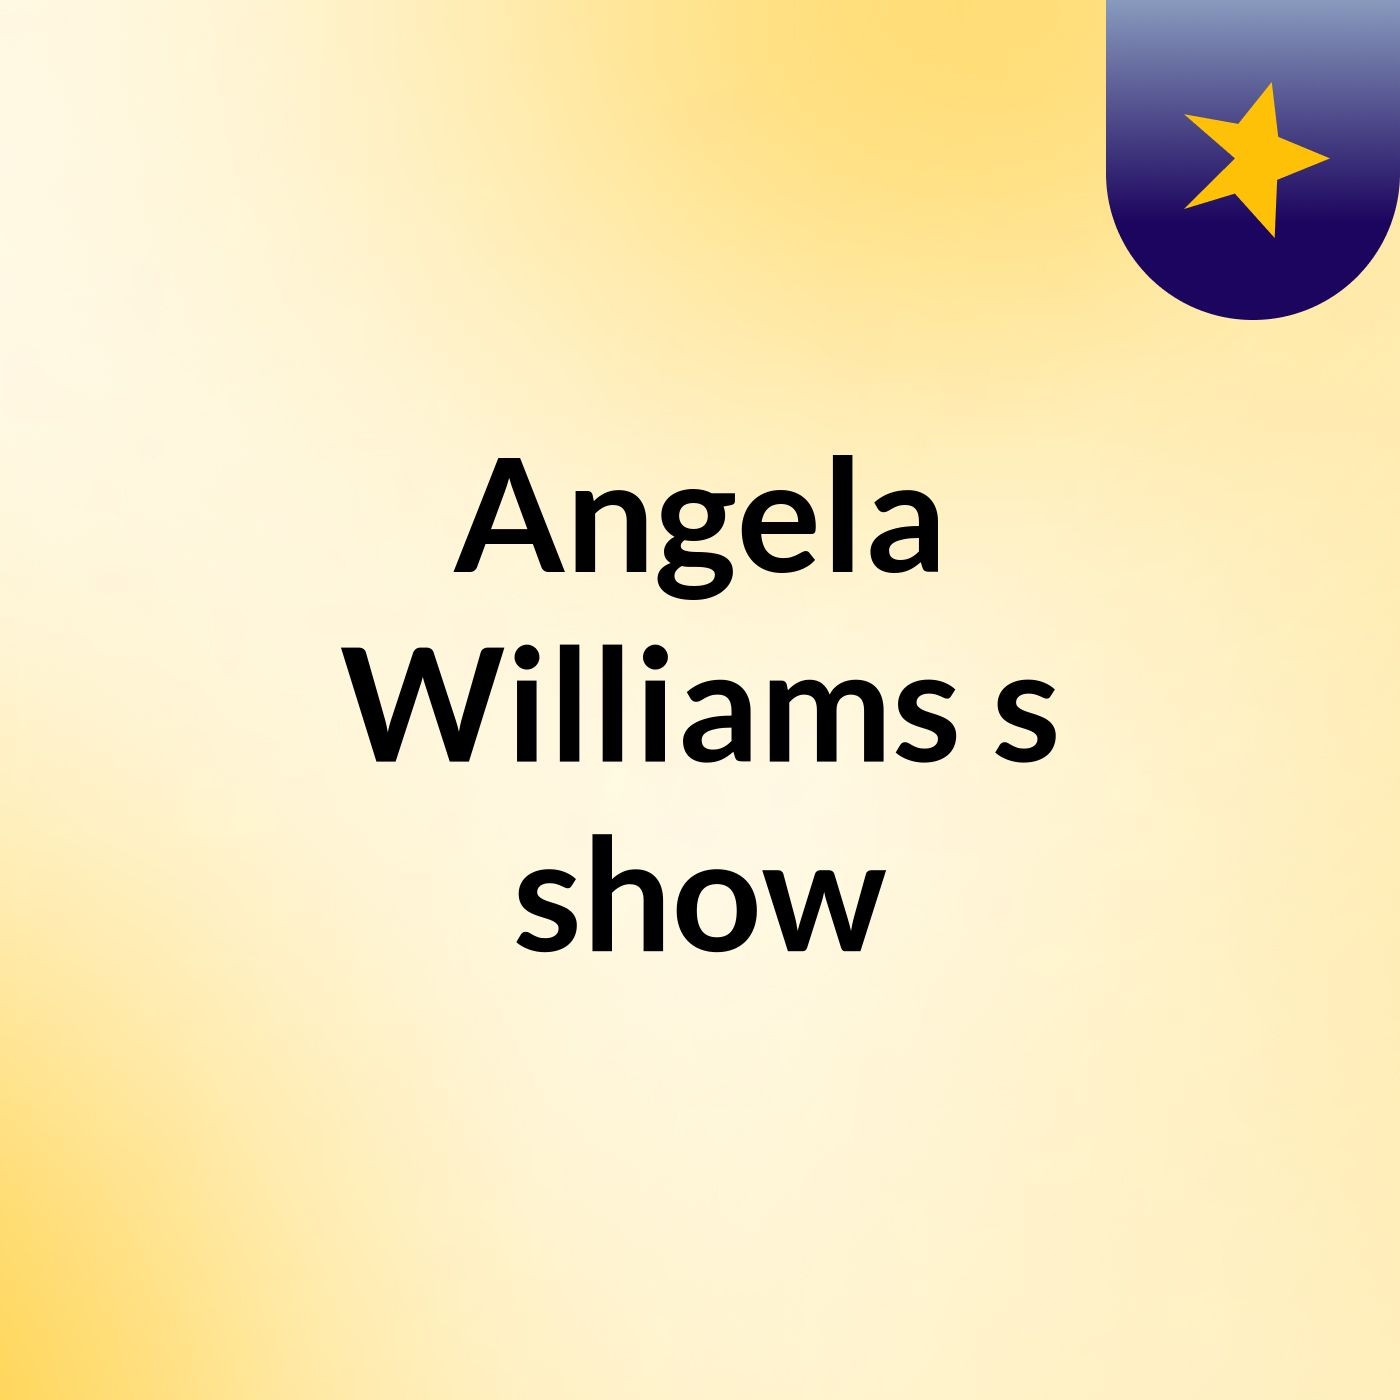 Episode 4 - Angela Williams's show